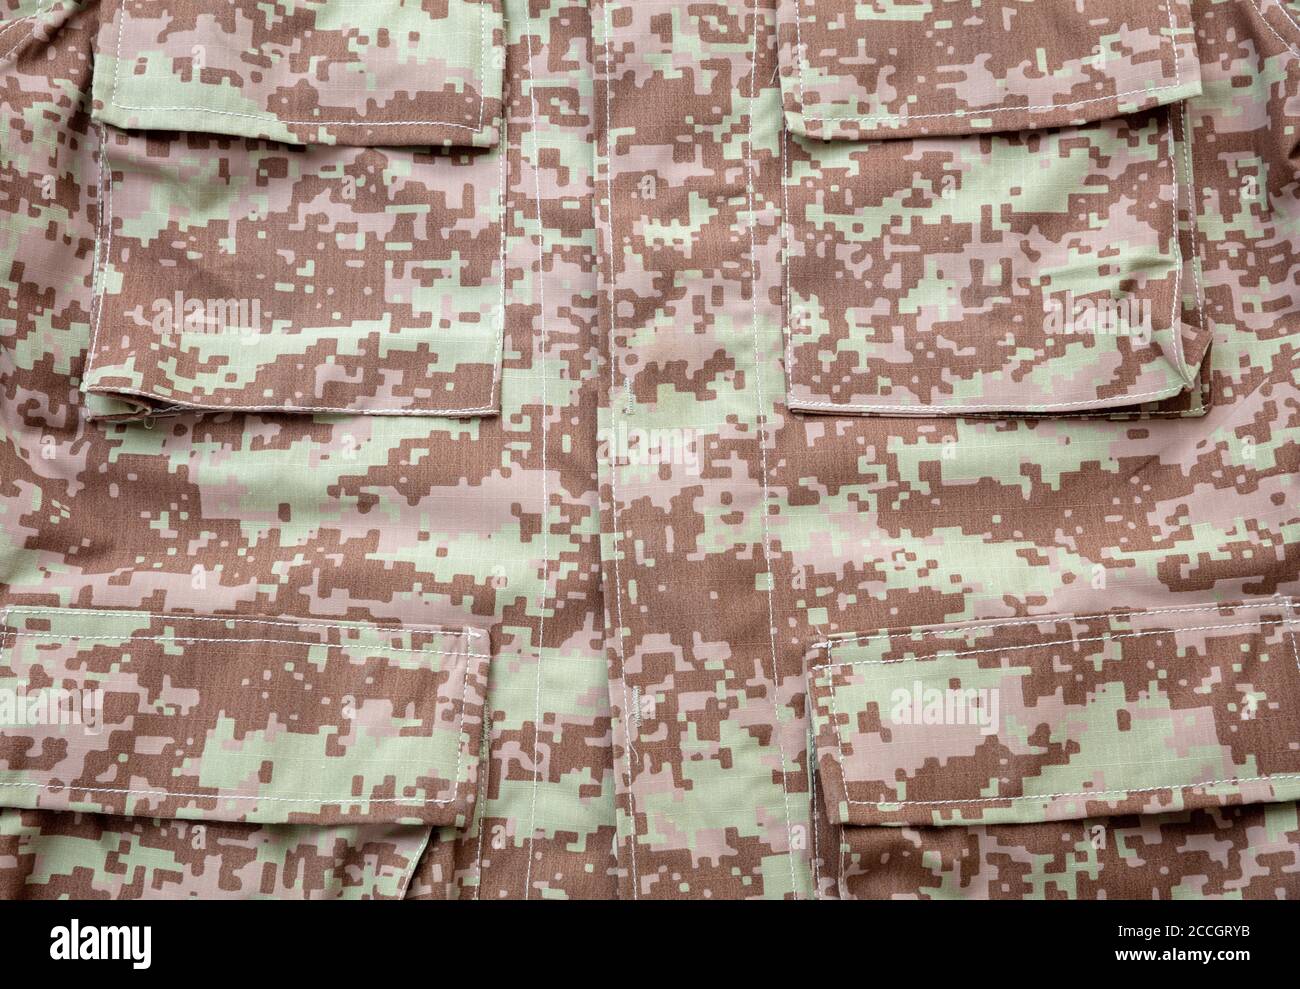 US army acu digital desert uniform shirt background, texture Military camouflage fabric textile closeup view, pocket detail Stock Photo